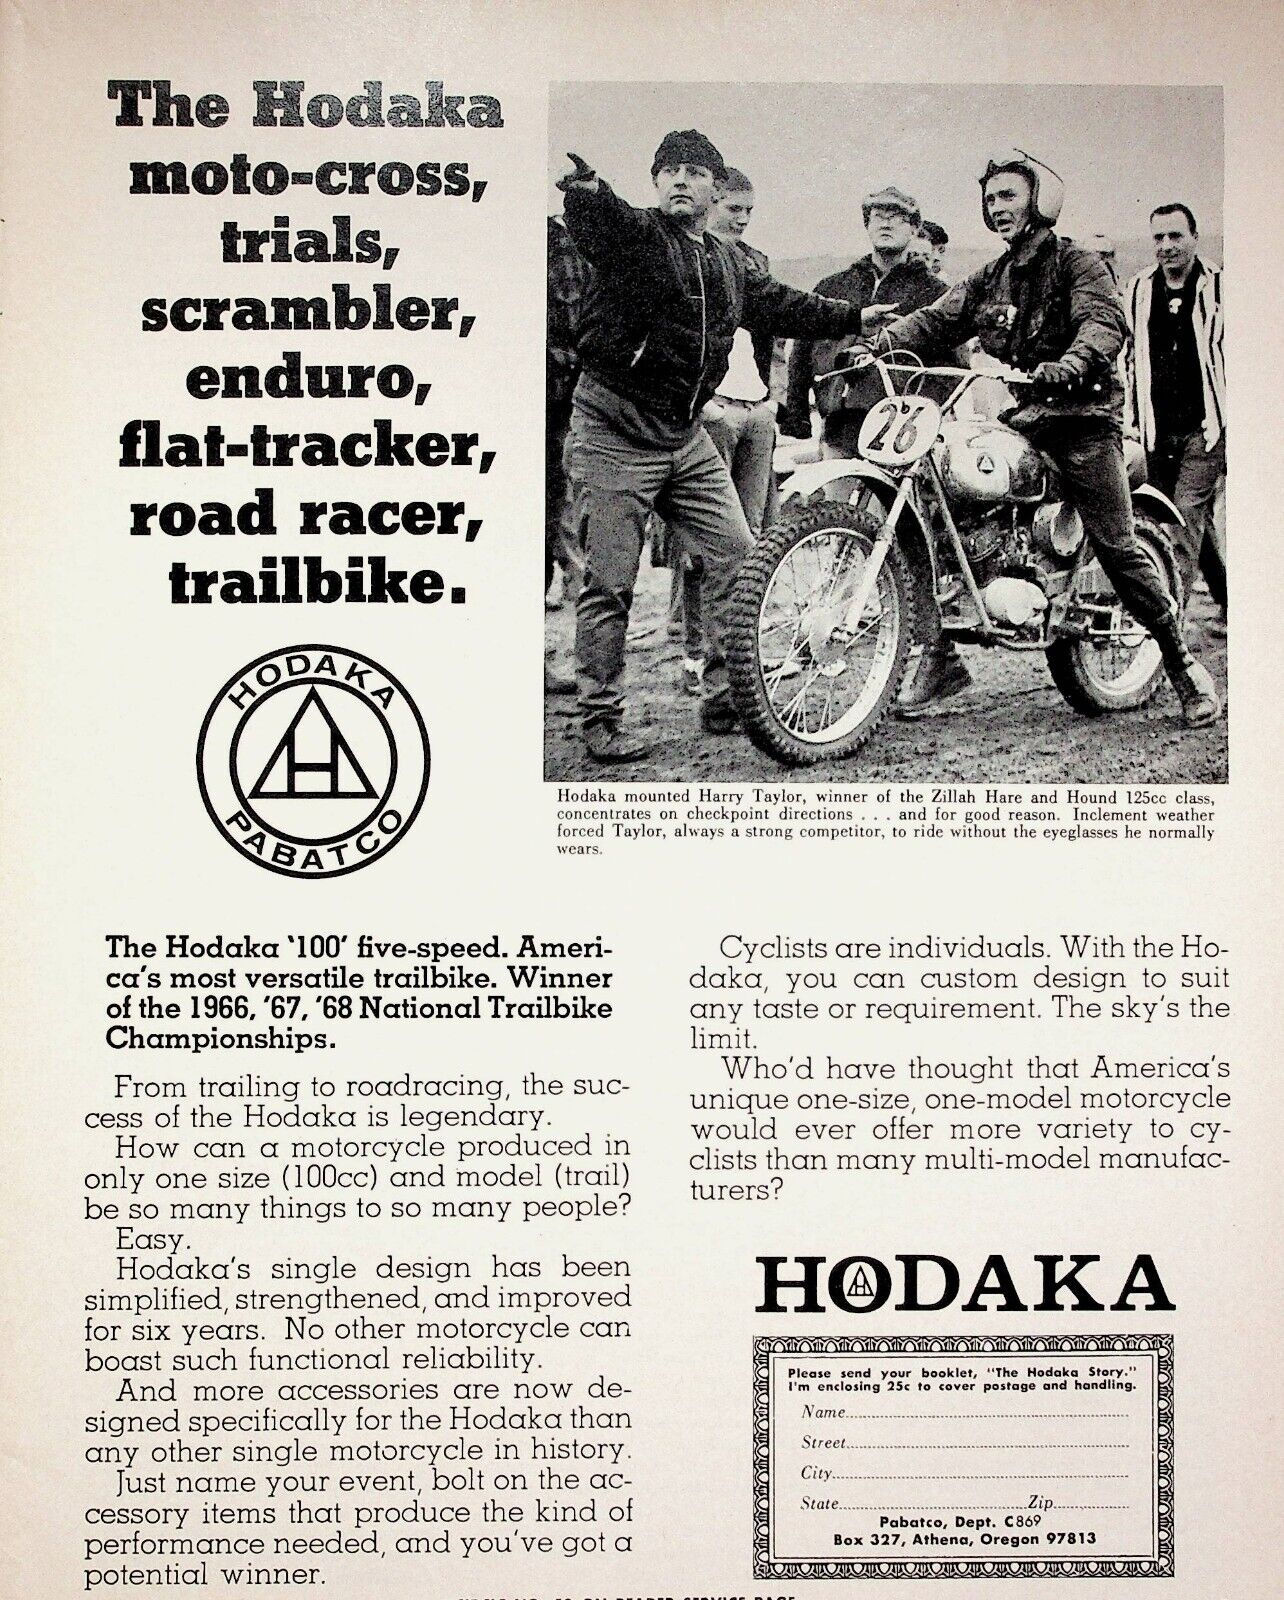 1969 Hodaka 100 Harry Taylor Wins Zillah Hare & Hound - Vintage Motorcycle Ad